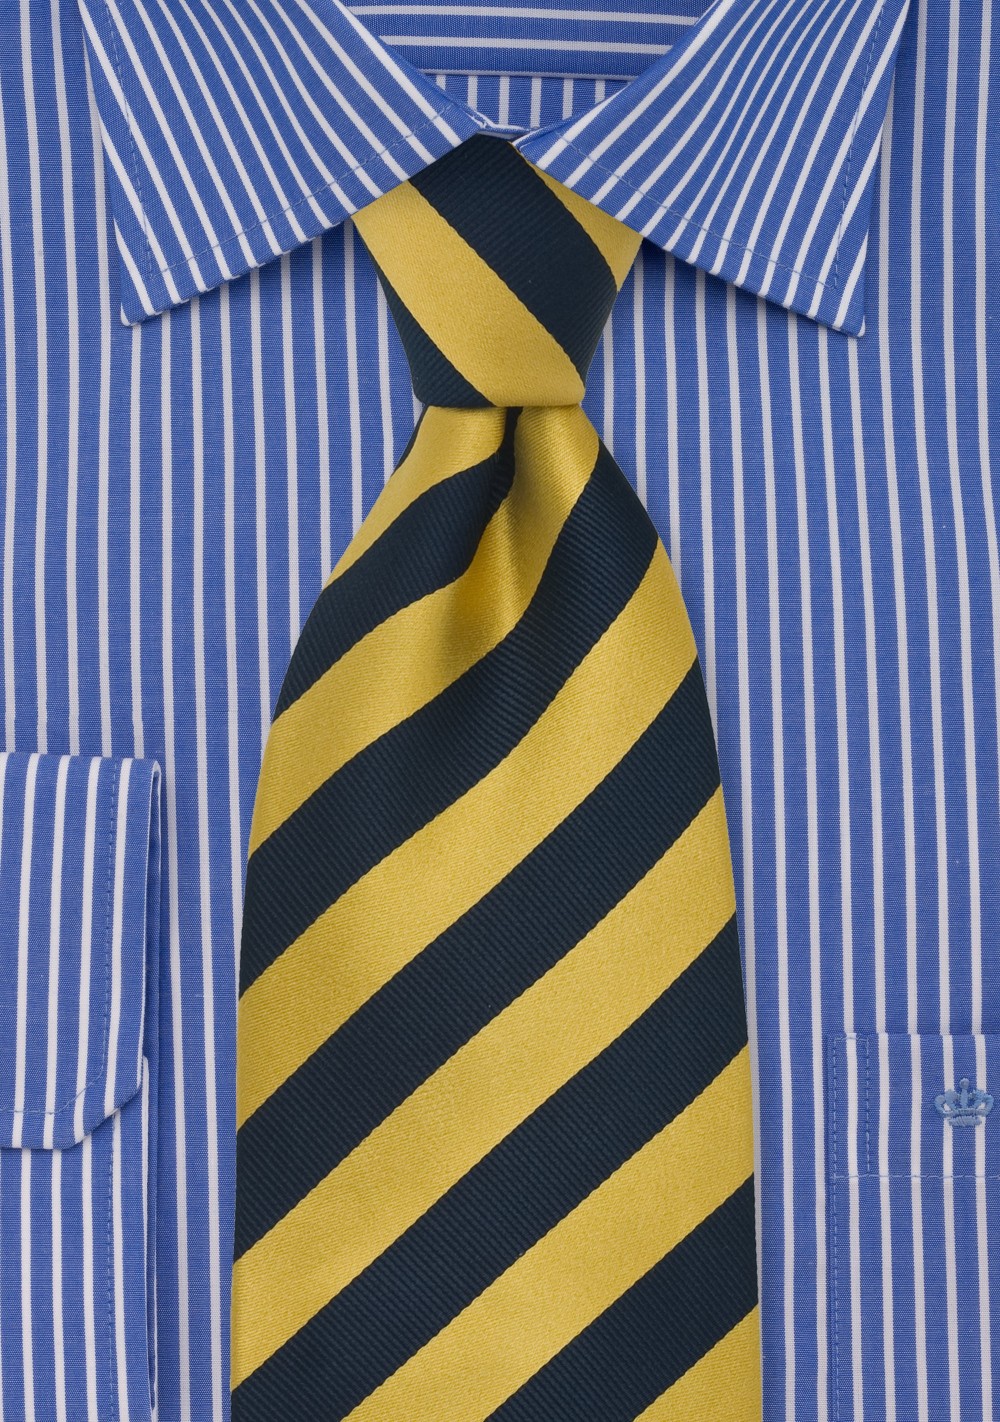 XL Necktie in Yellow and Navy